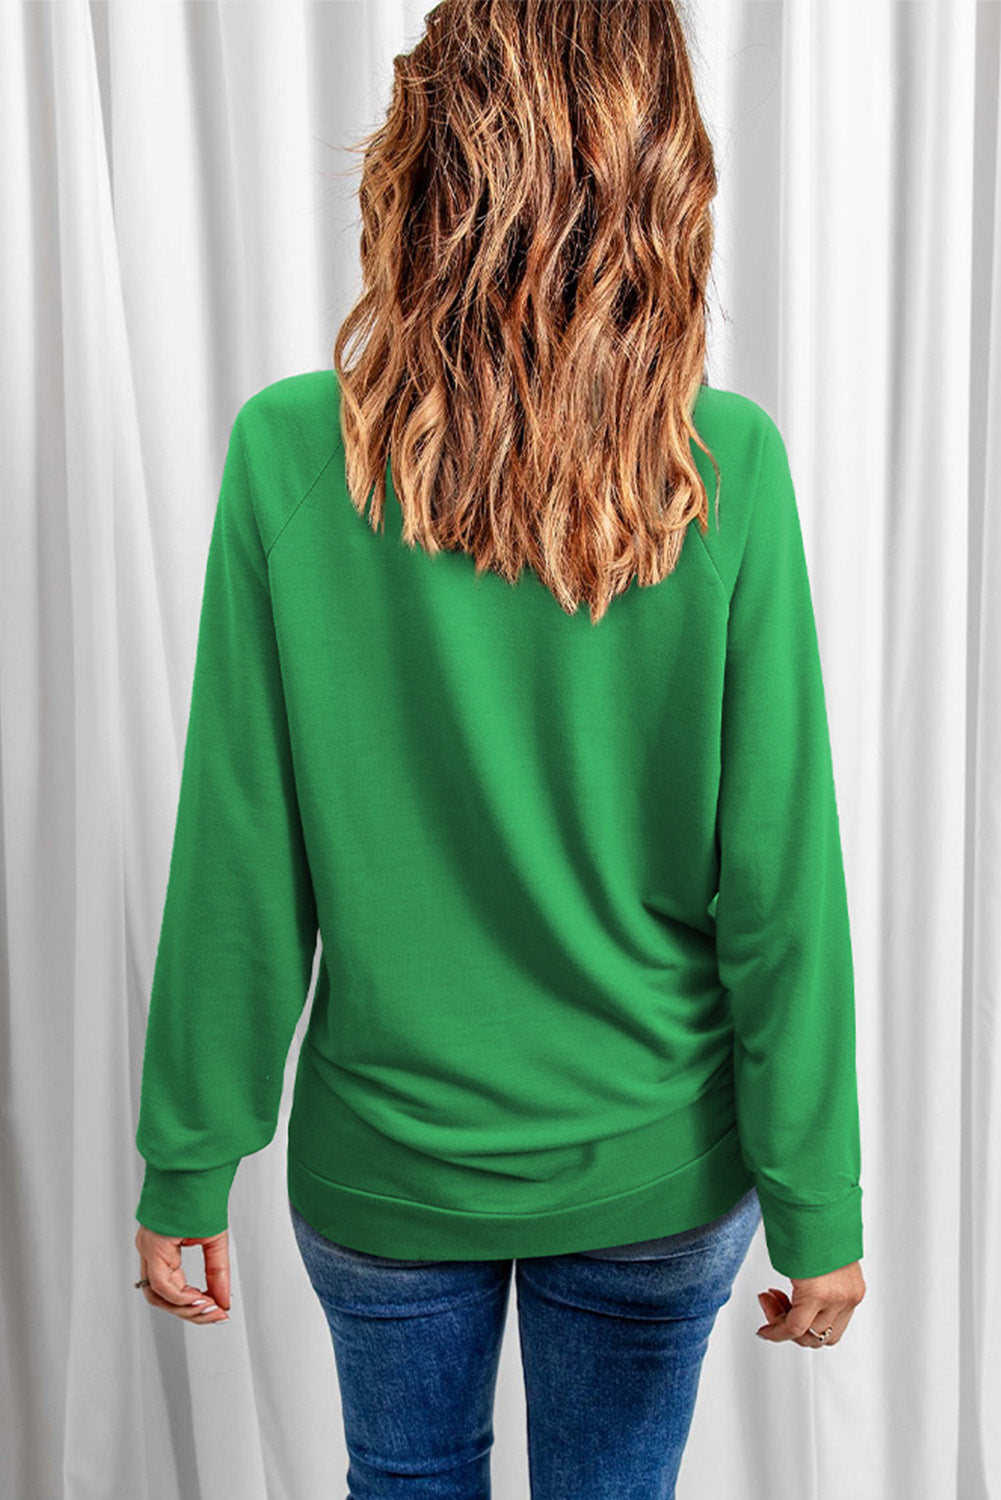 Green Lucky Clover Heart Graphic Raglan Sleeve Sweatshirt